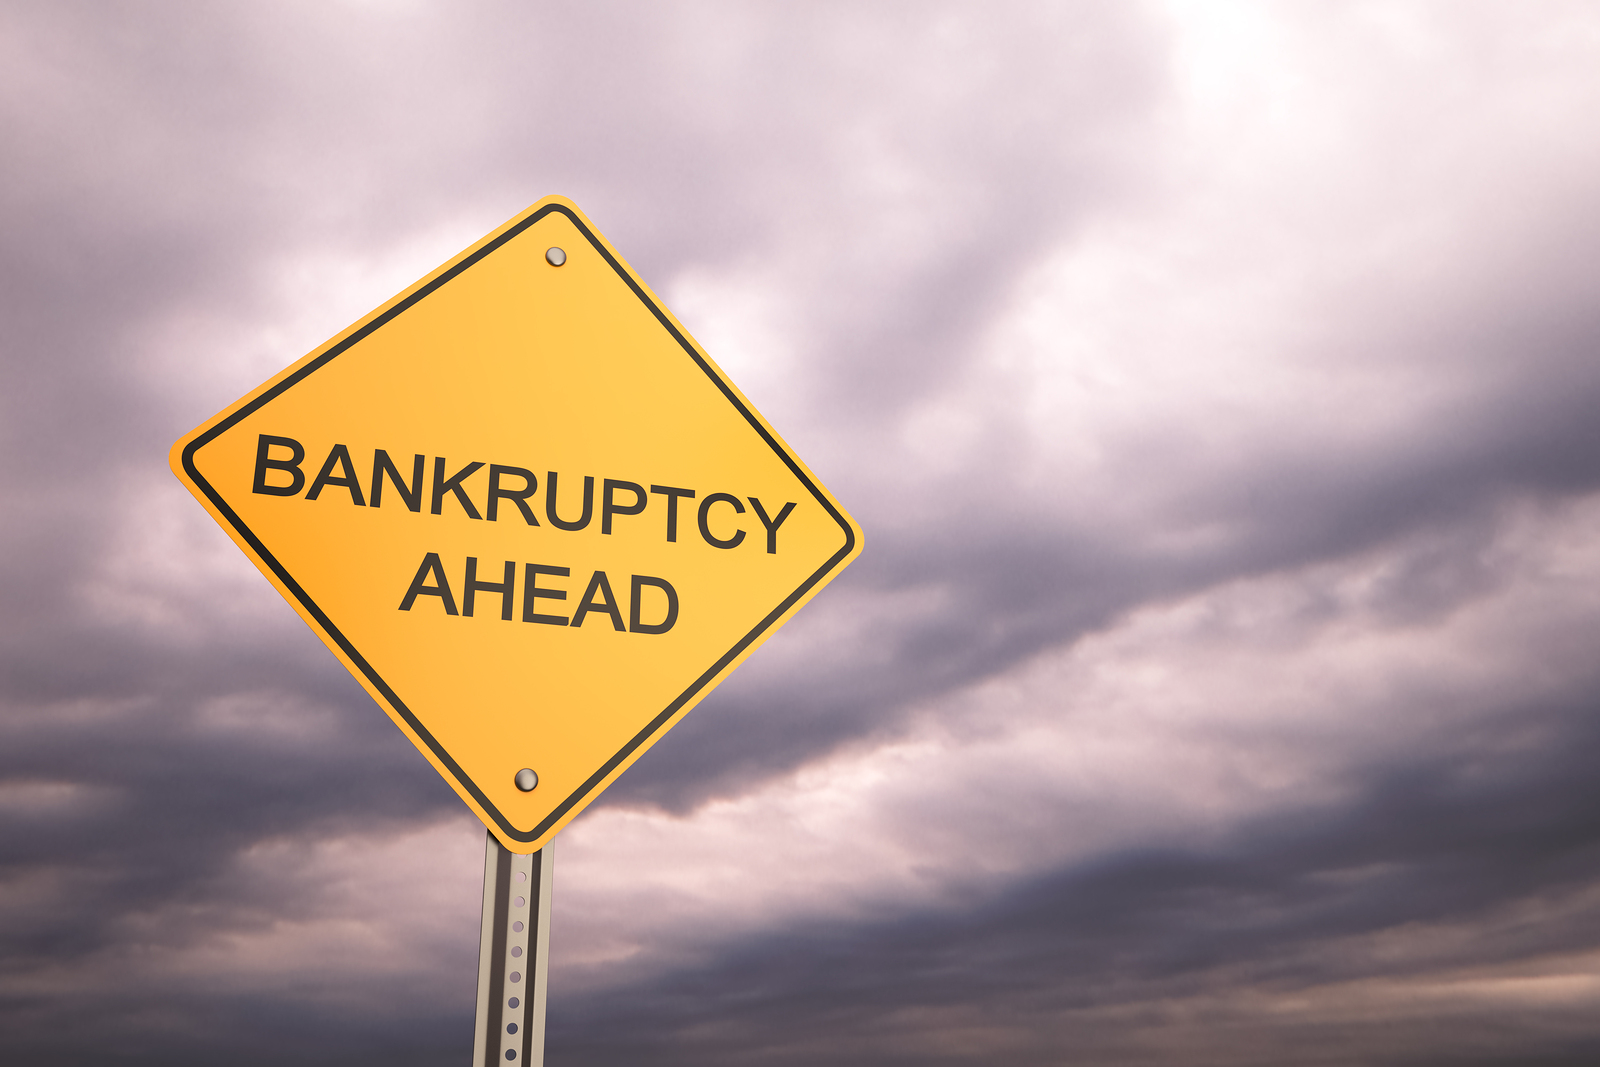 Bankruptcy Ahead